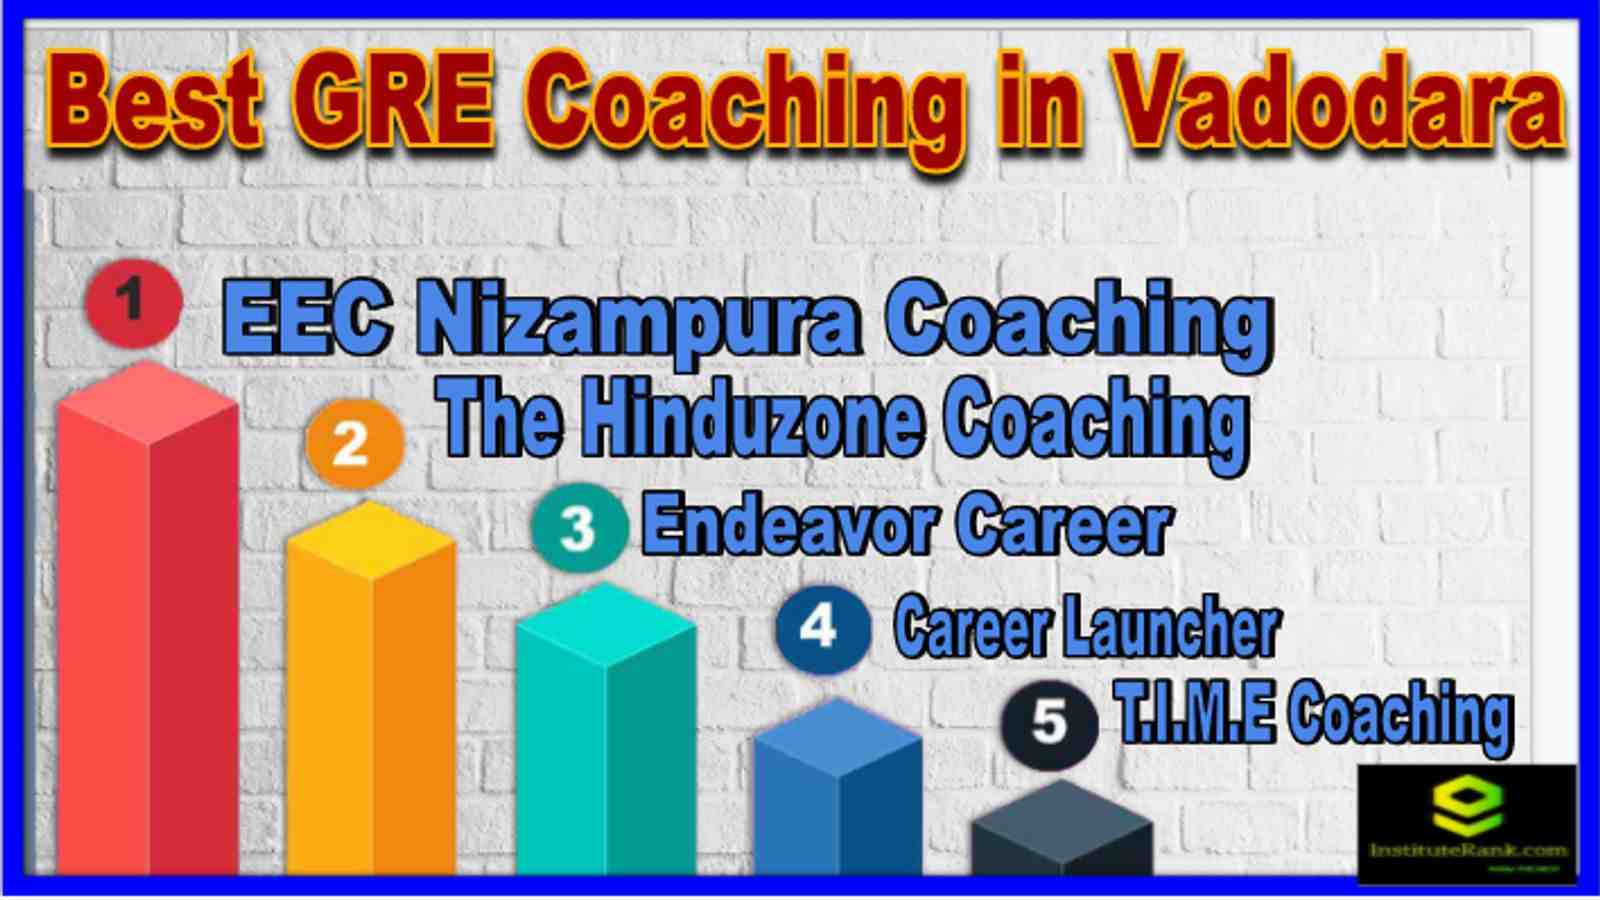 Top GRE Coaching in Vadodara